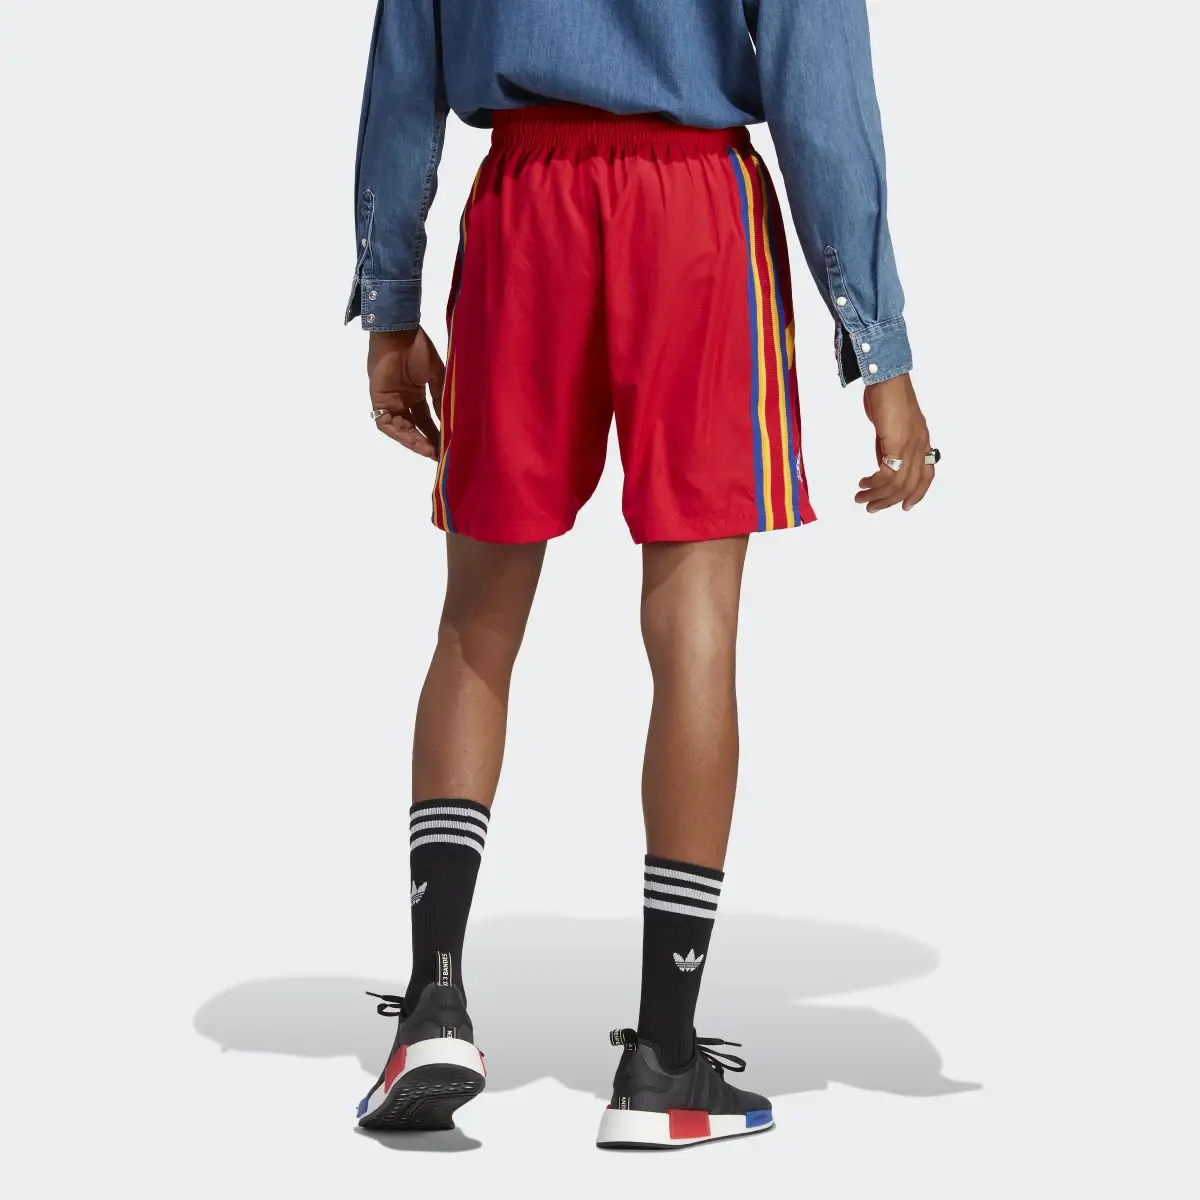 Adidas Shorts Eric Emanuel McDonald's. 2